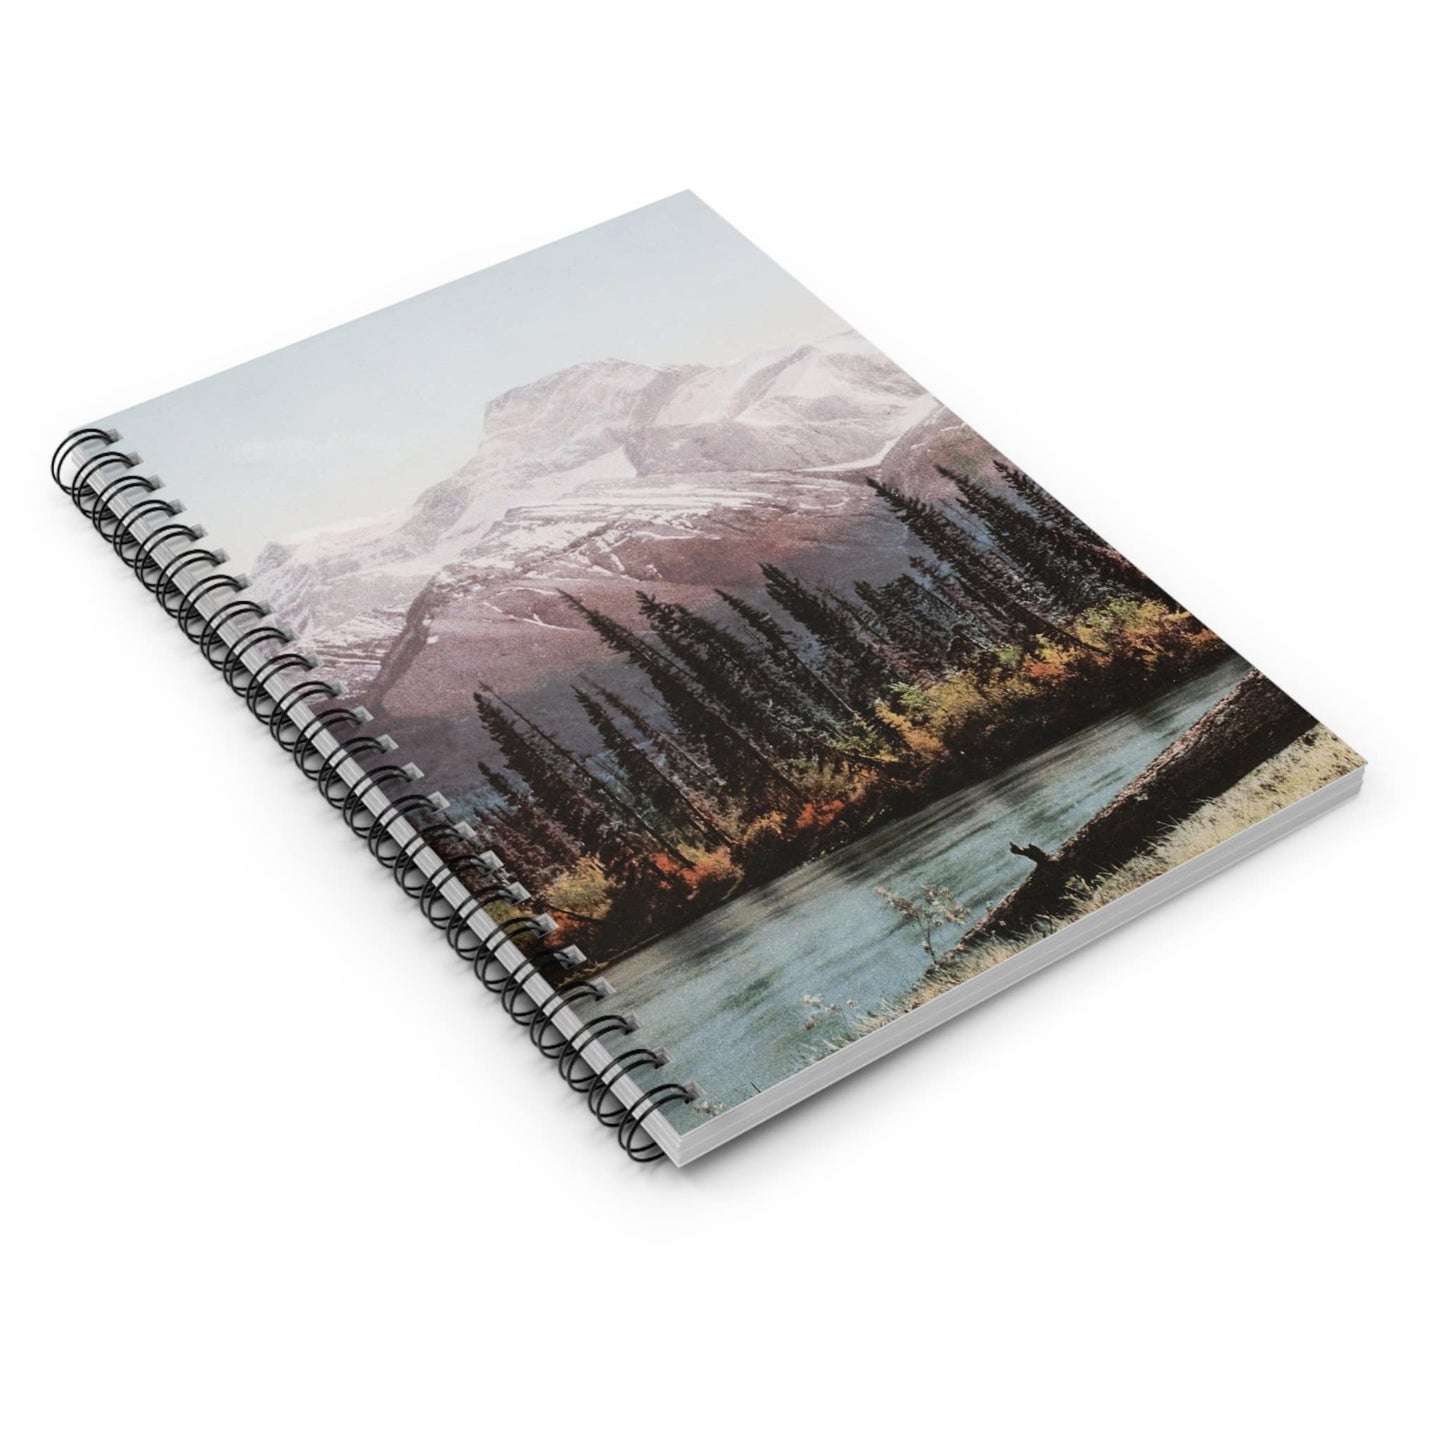 Beautiful Mountain Spiral Notebook Laying Flat on White Surface